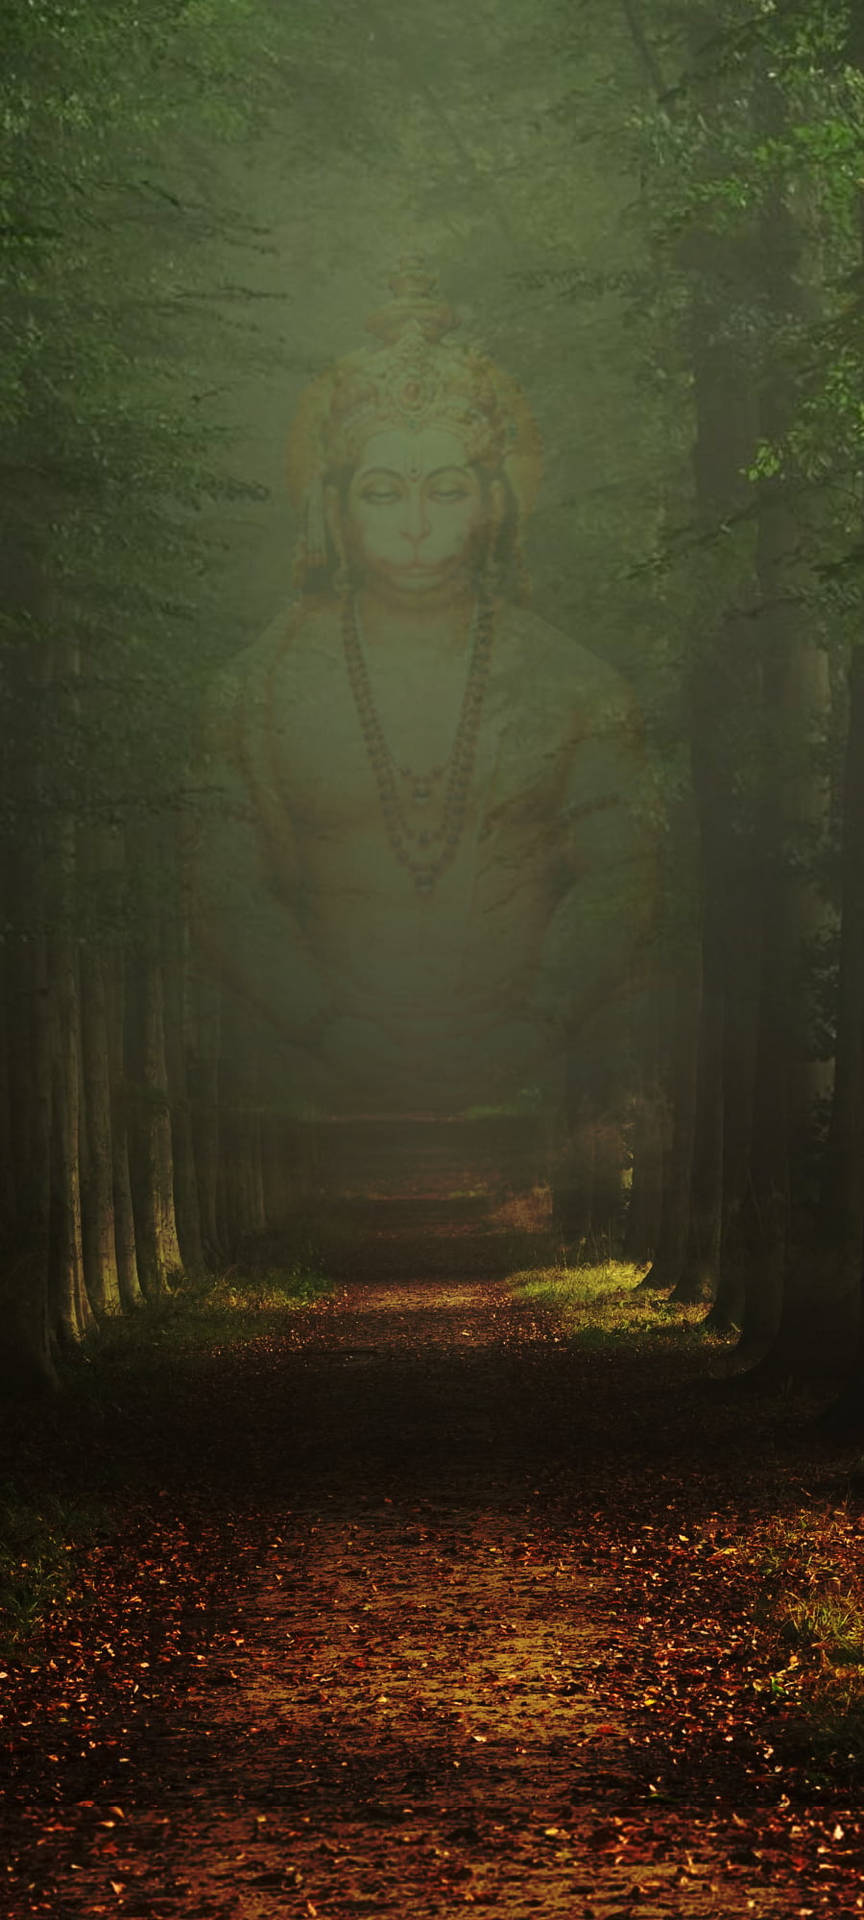 Hindu God Hanuman Apparition Background